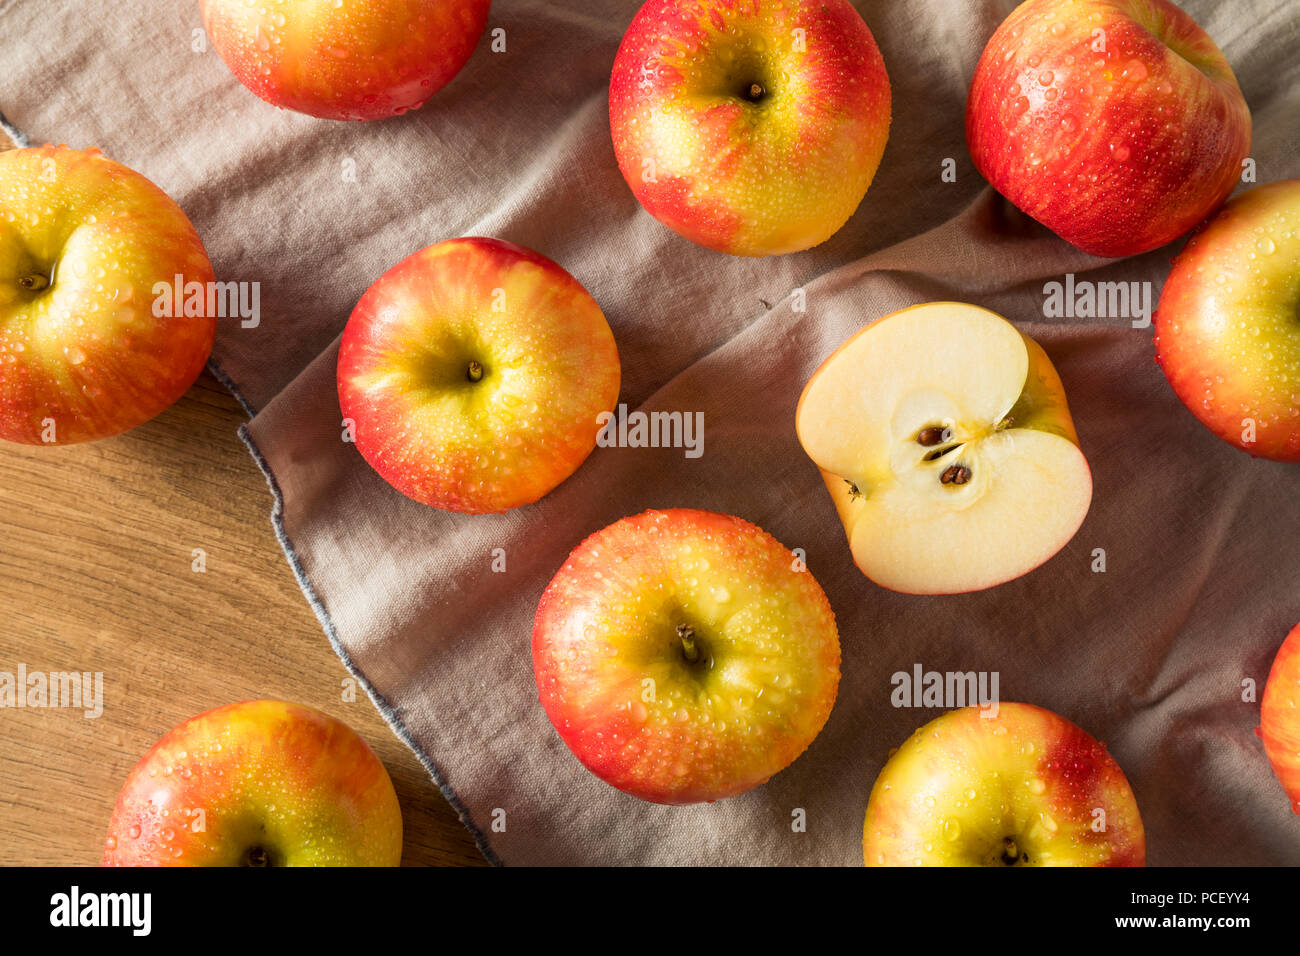 https://c8.alamy.com/comp/PCEYY4/raw-red-organic-honeycrisp-apples-ready-to-eat-PCEYY4.jpg